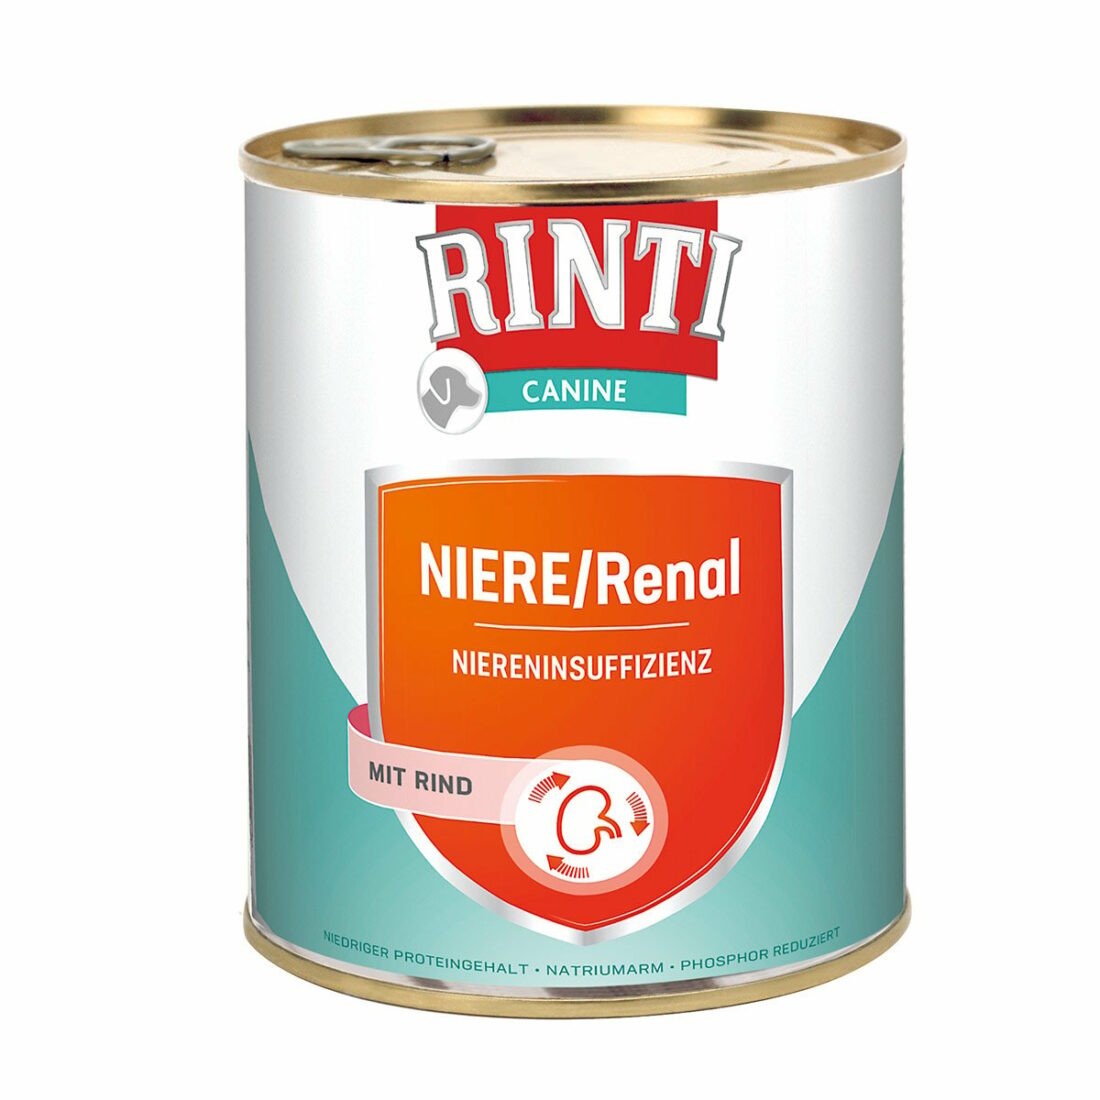 RINTI Canine Niere/Renal hovězí maso 12